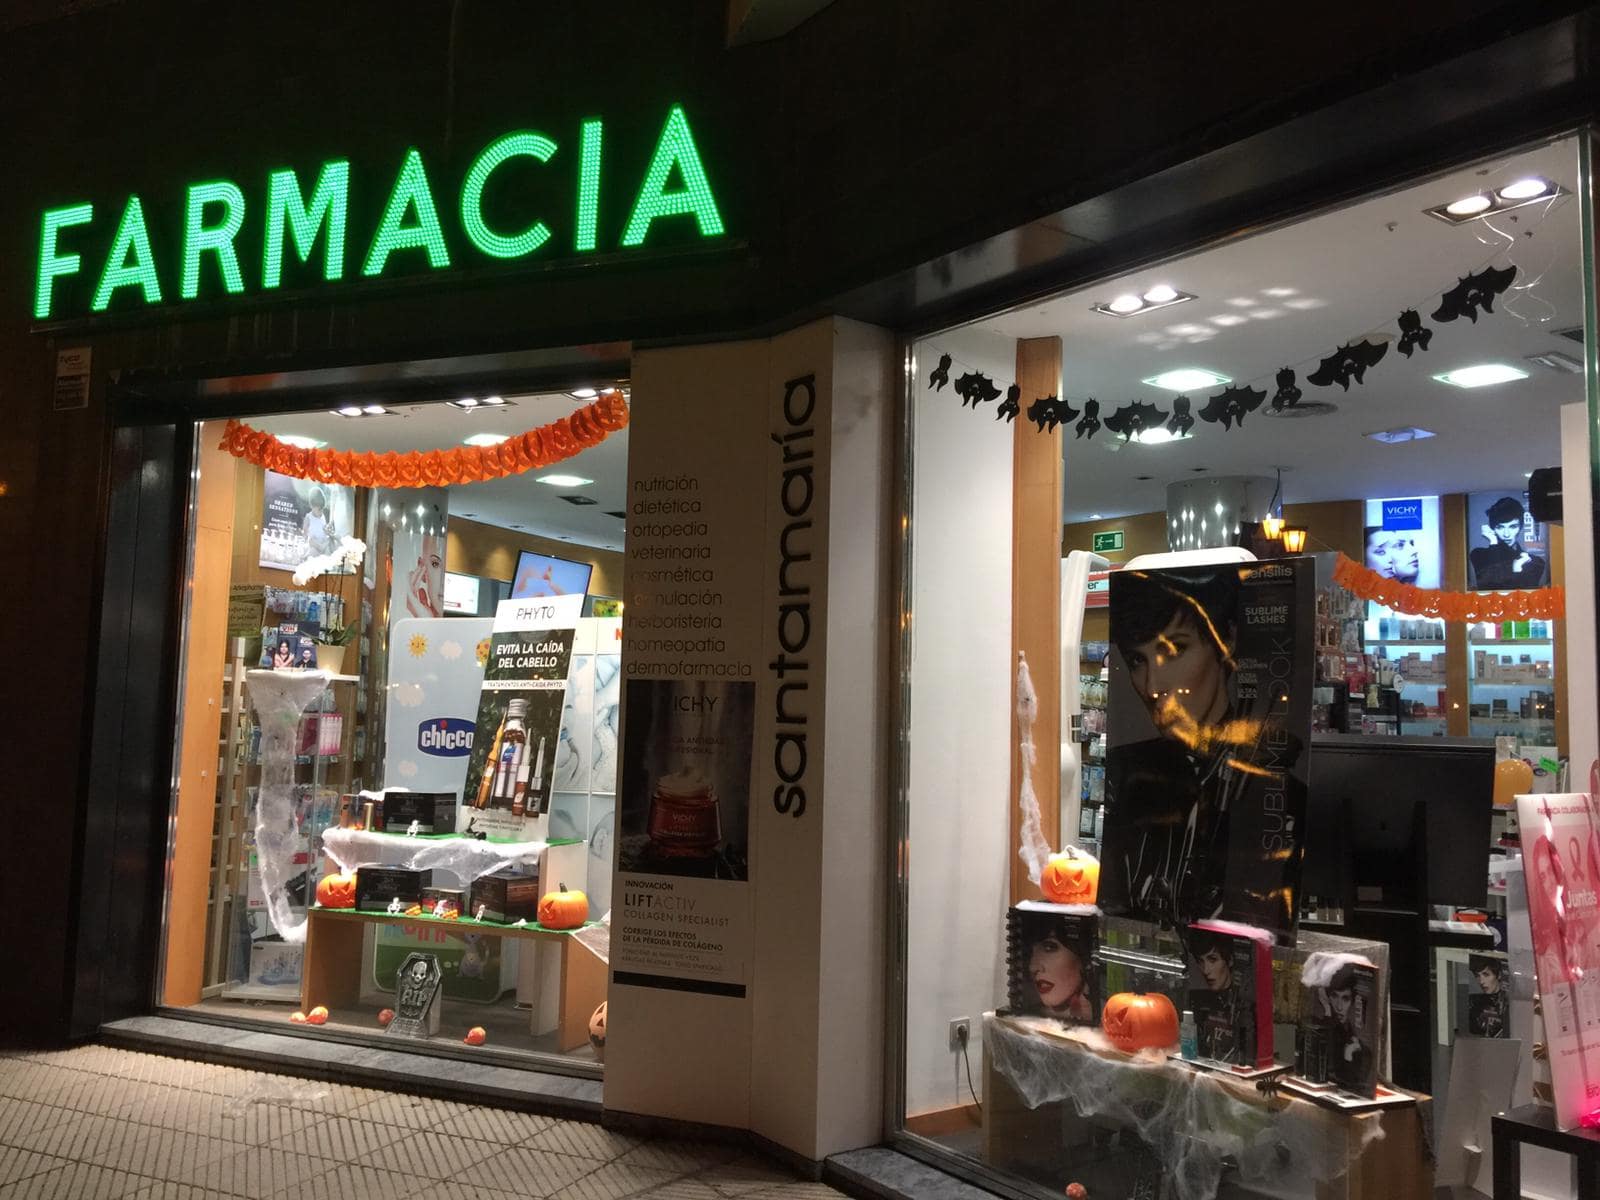 Farmacia Corredodia Halloween 2018